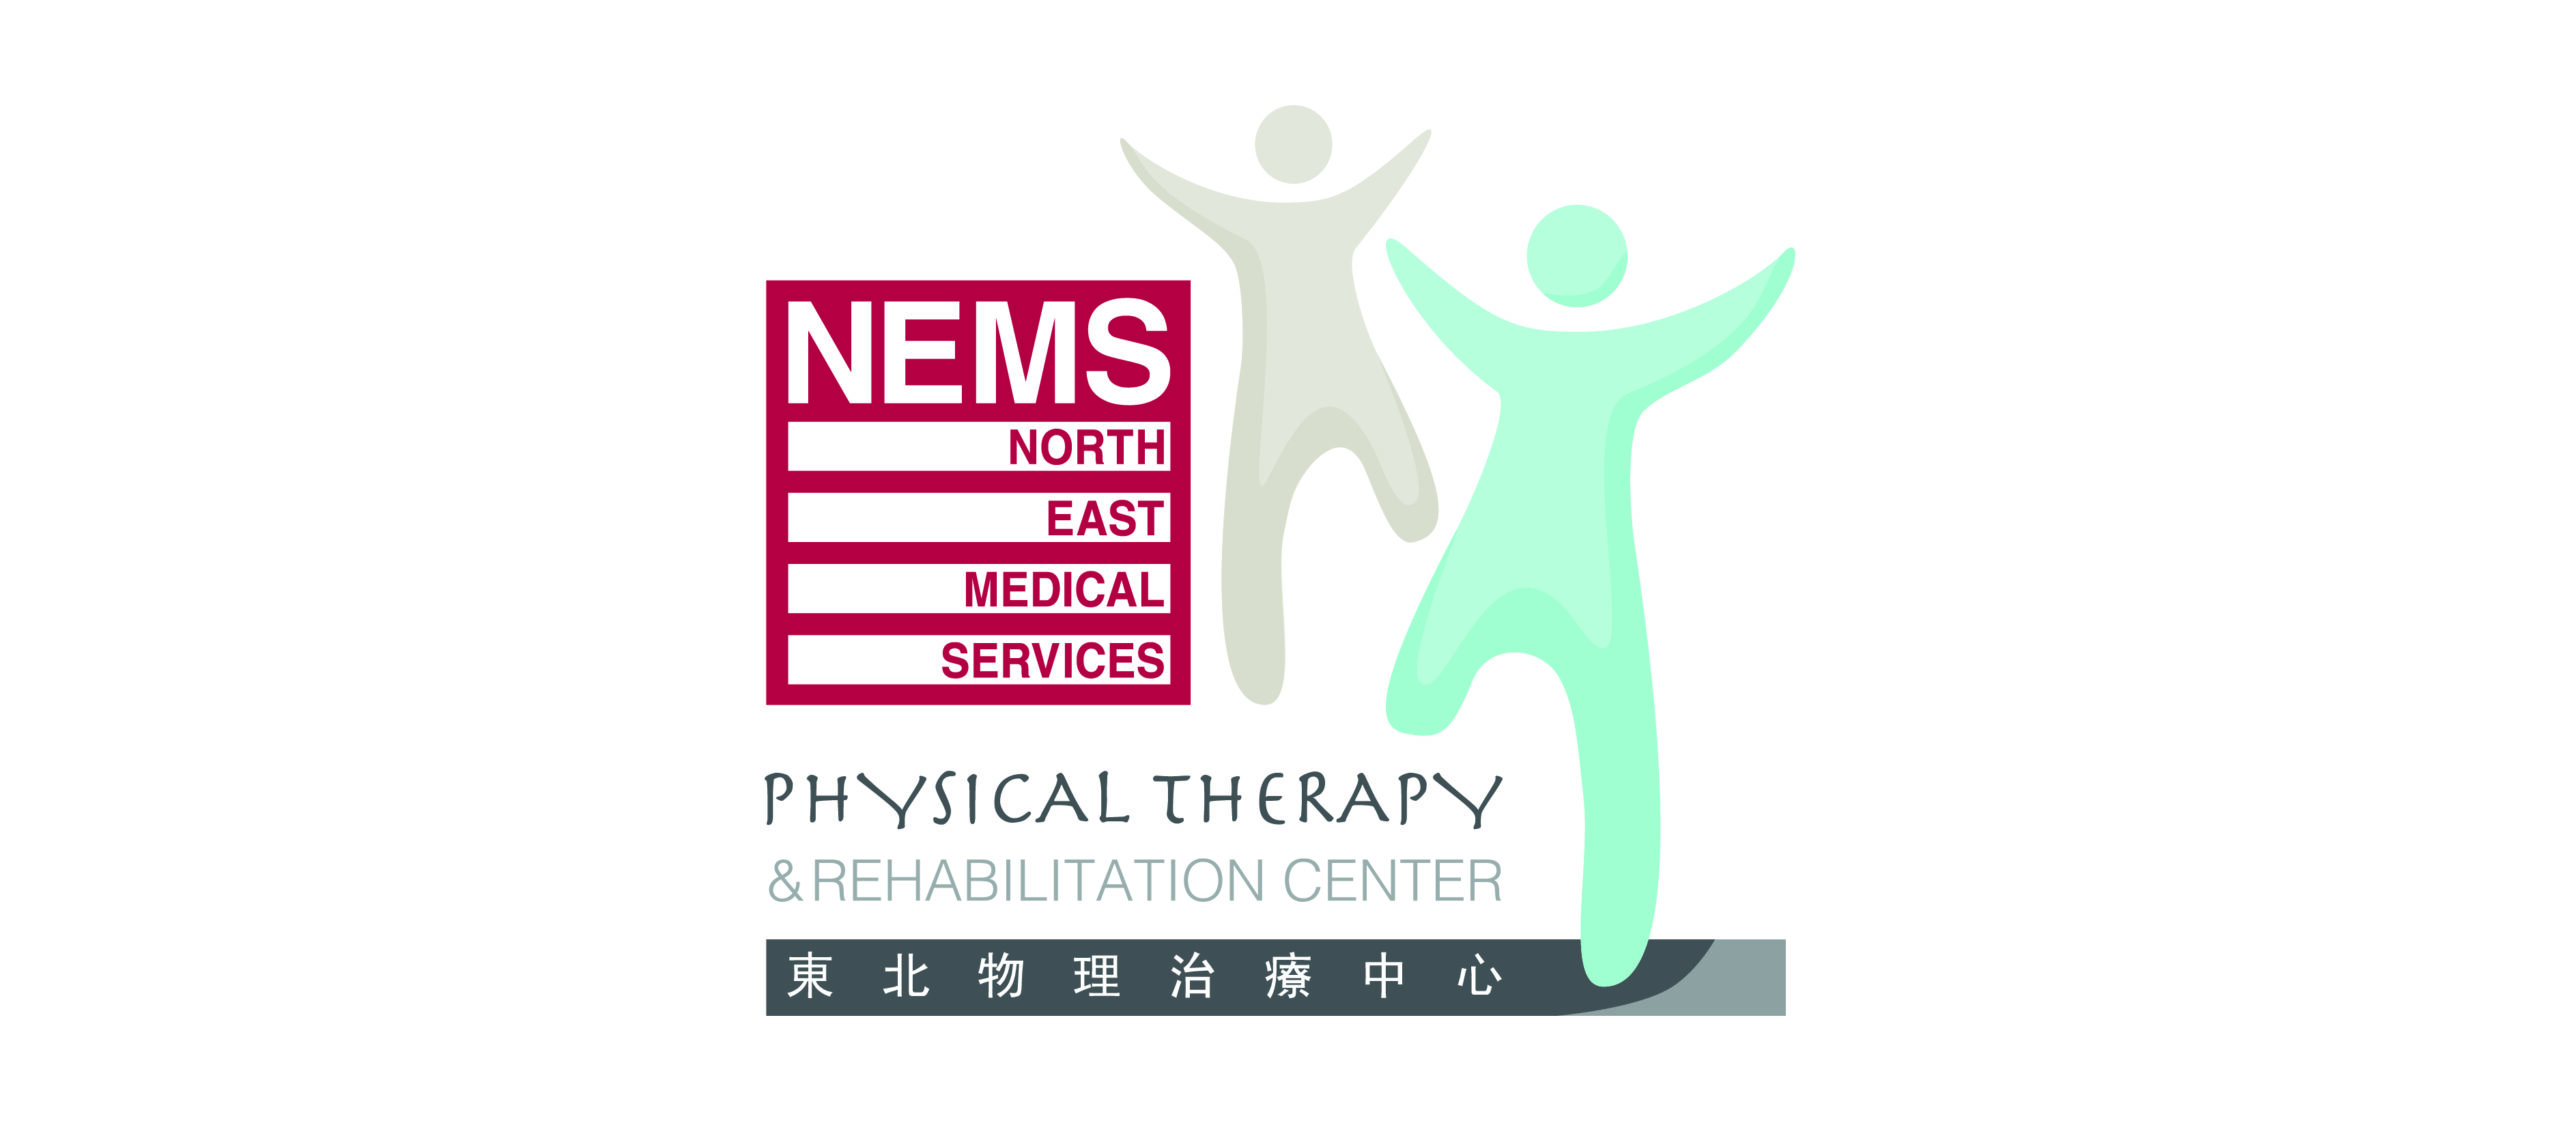 Centro de fisioterapia y rehabilitación NEMS